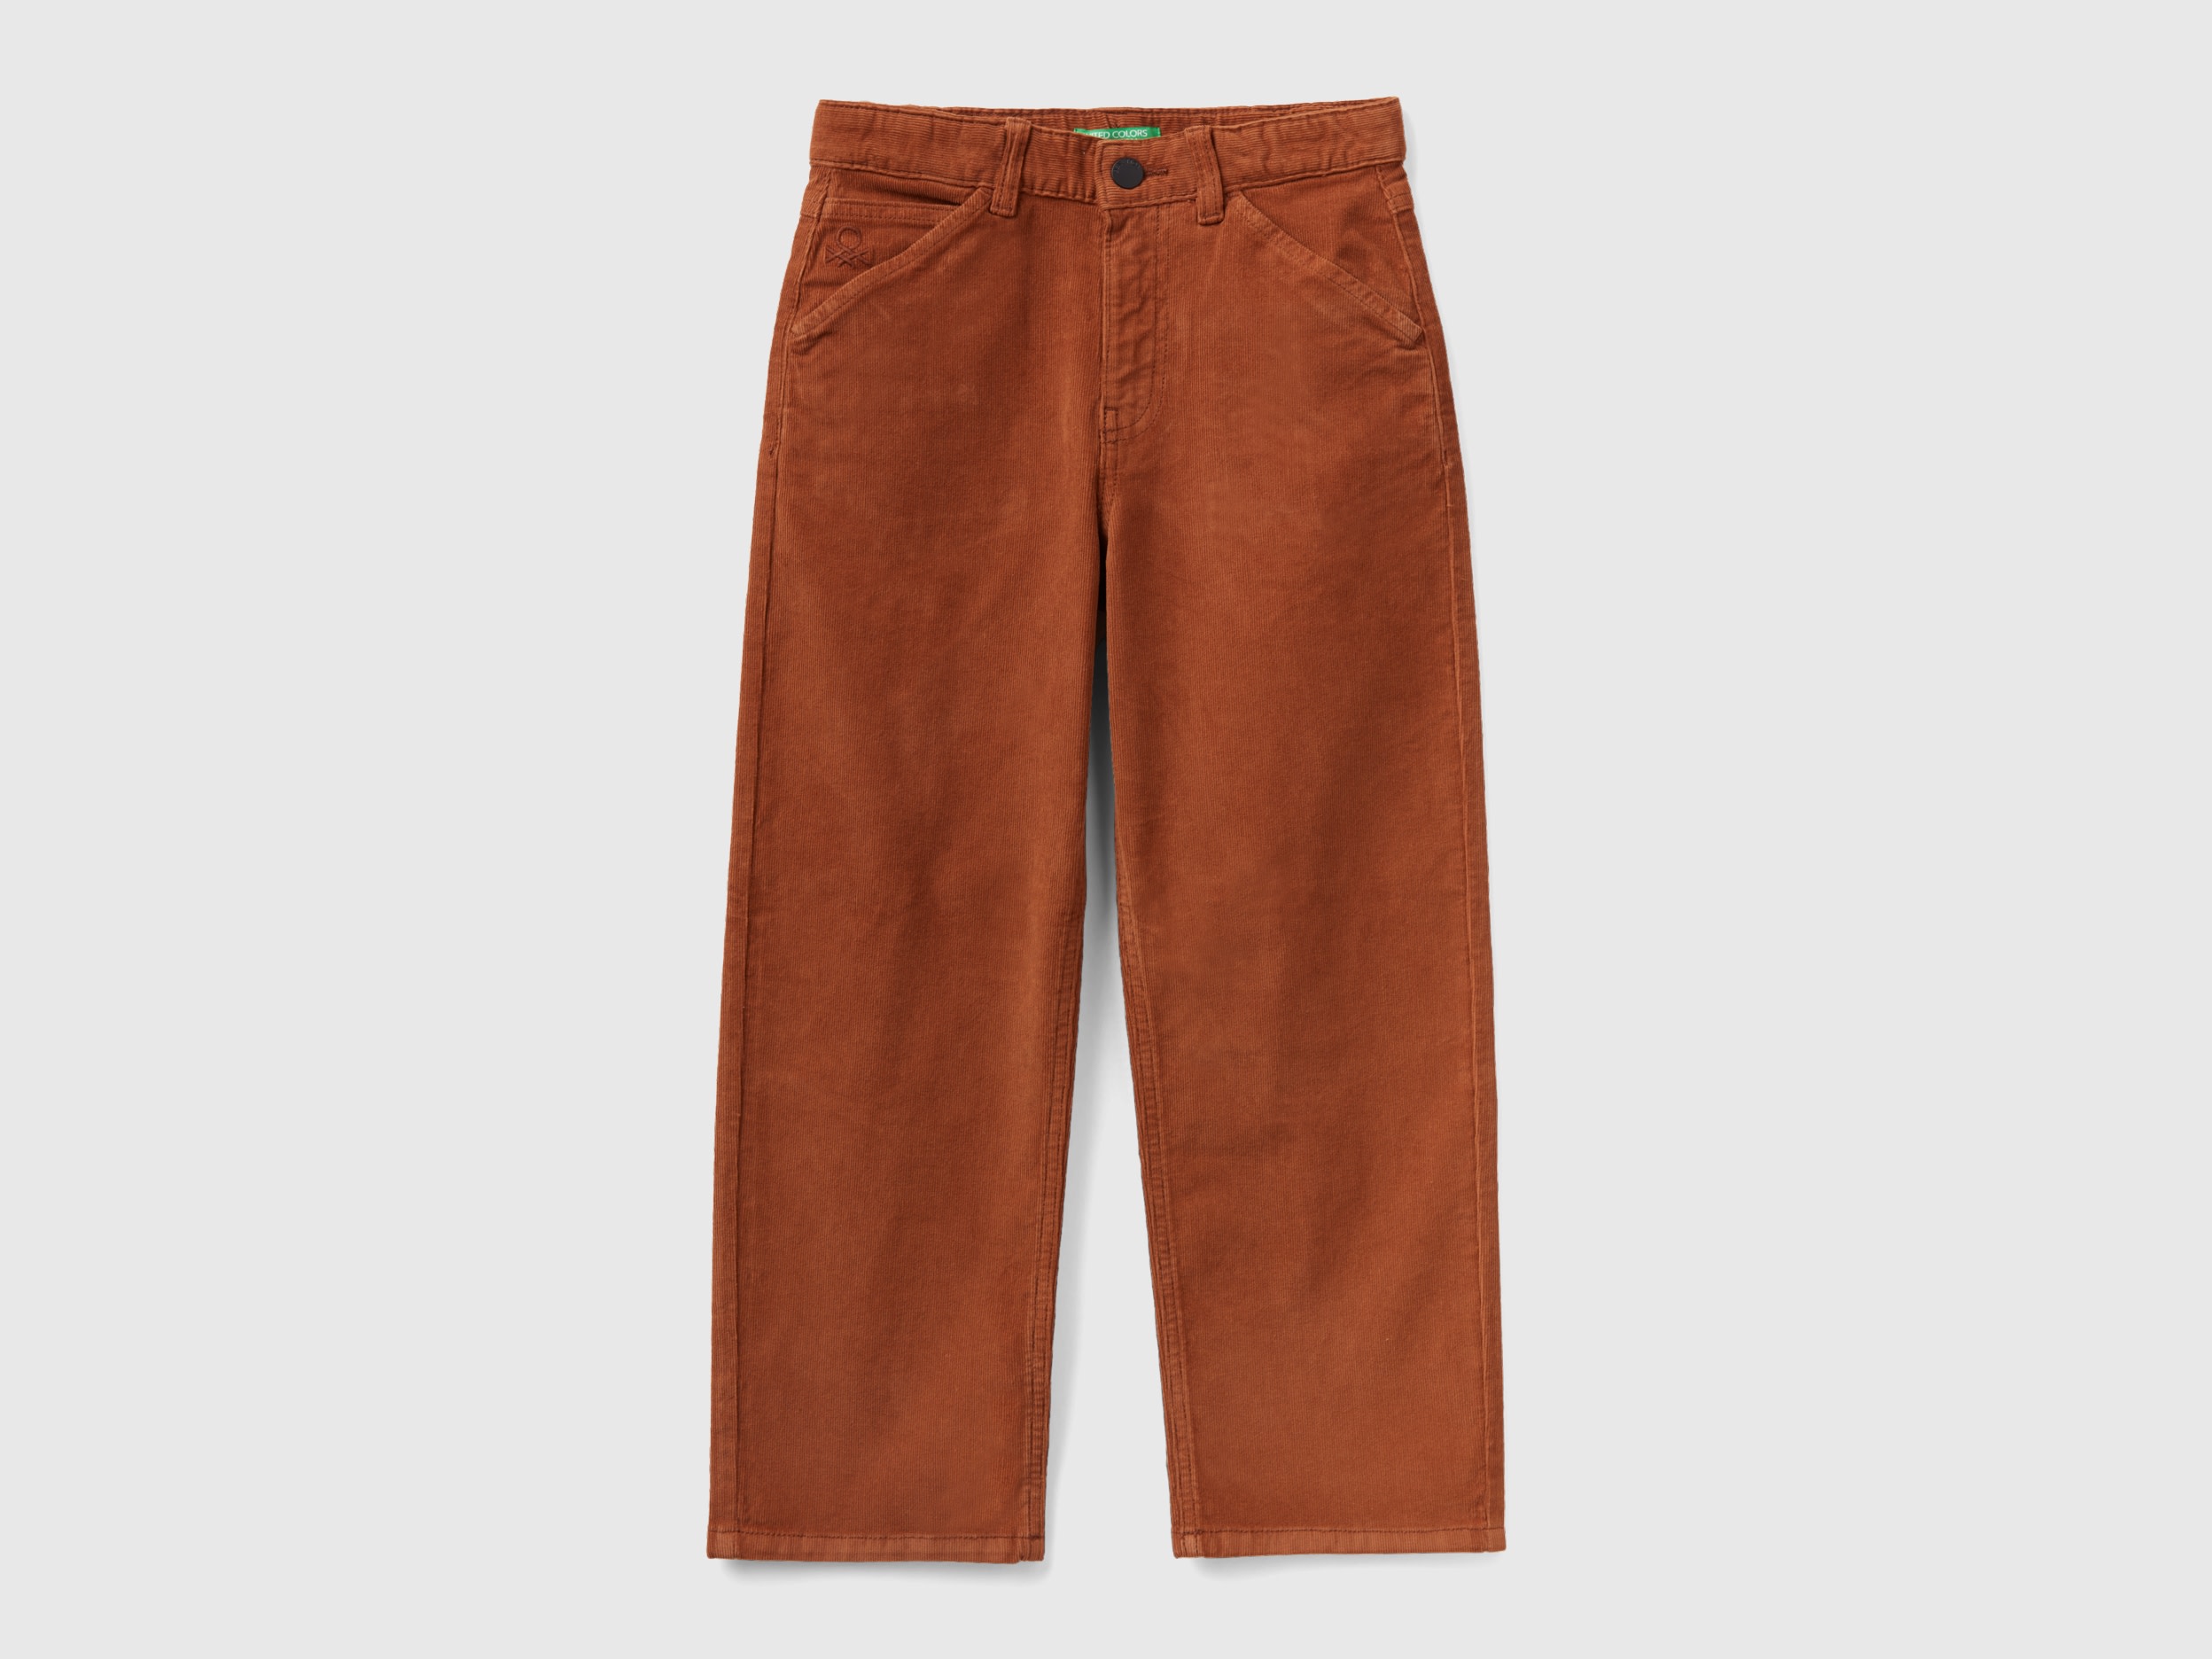 Benetton, Worker-style Velvet Trousers, size S, Brown, Kids